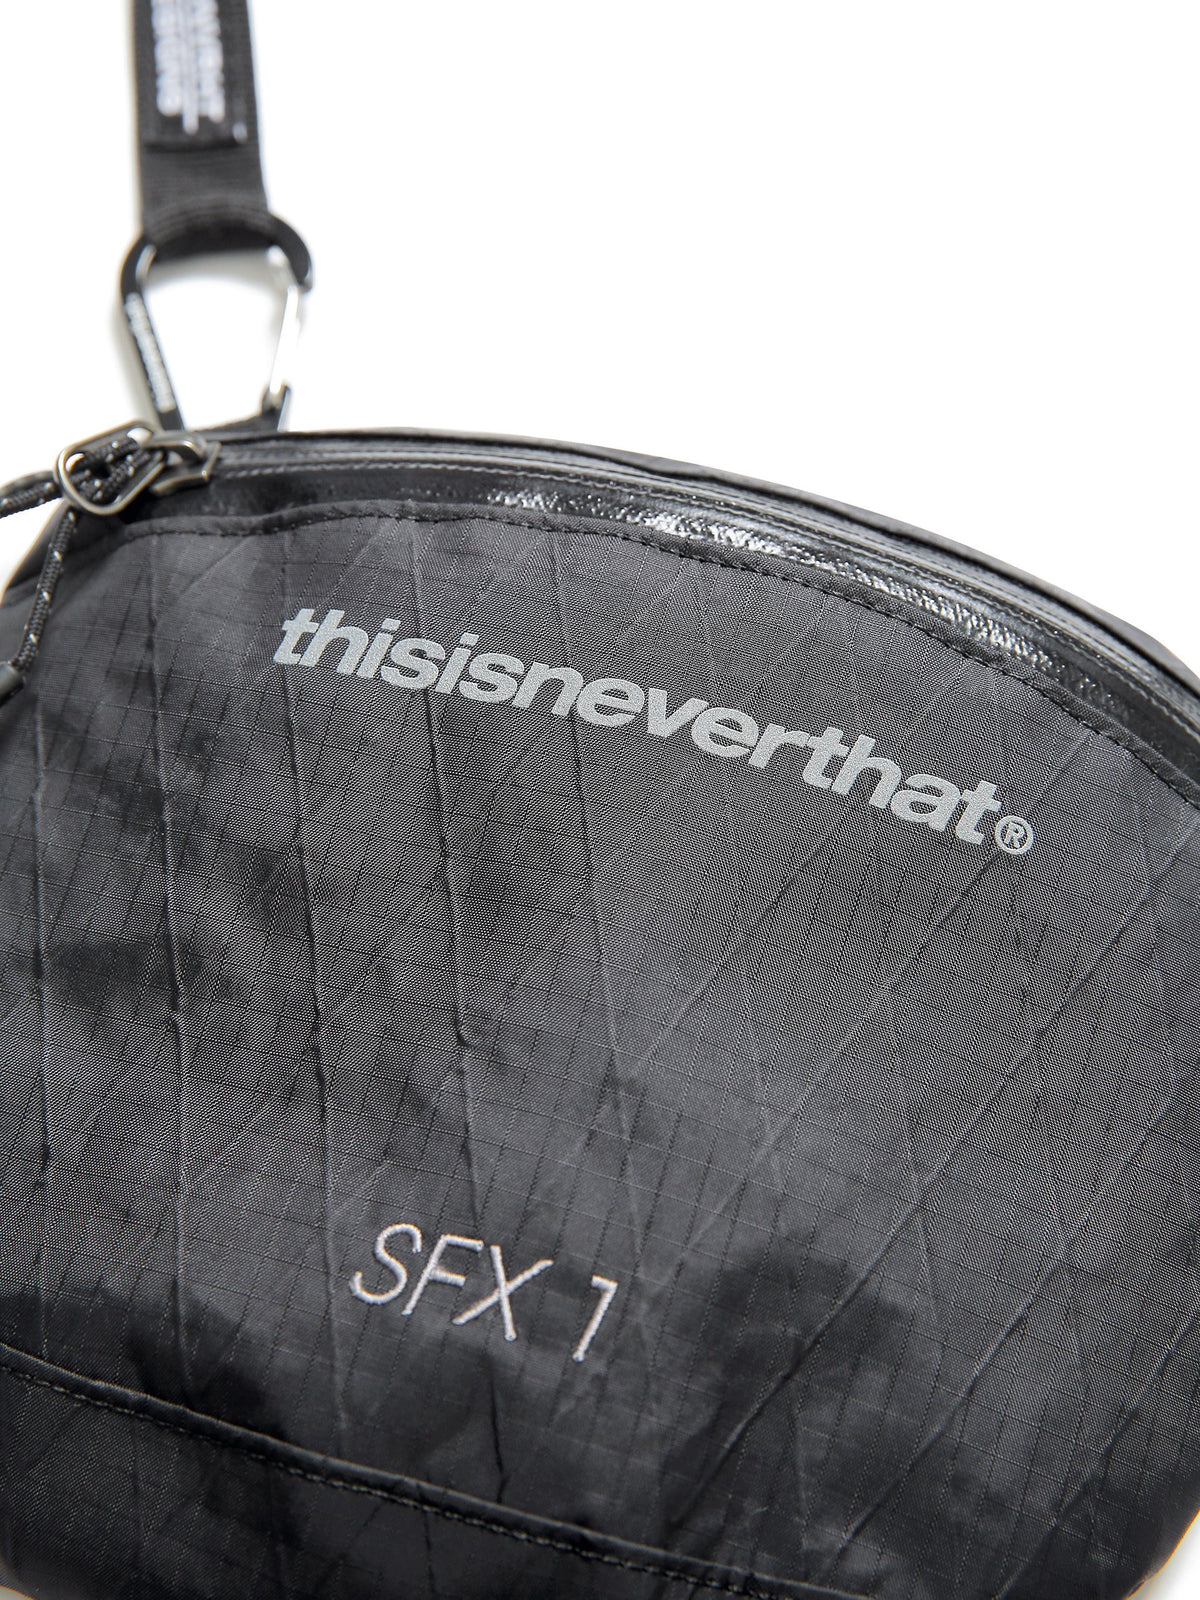 SFX 1 Mini Bag Bag